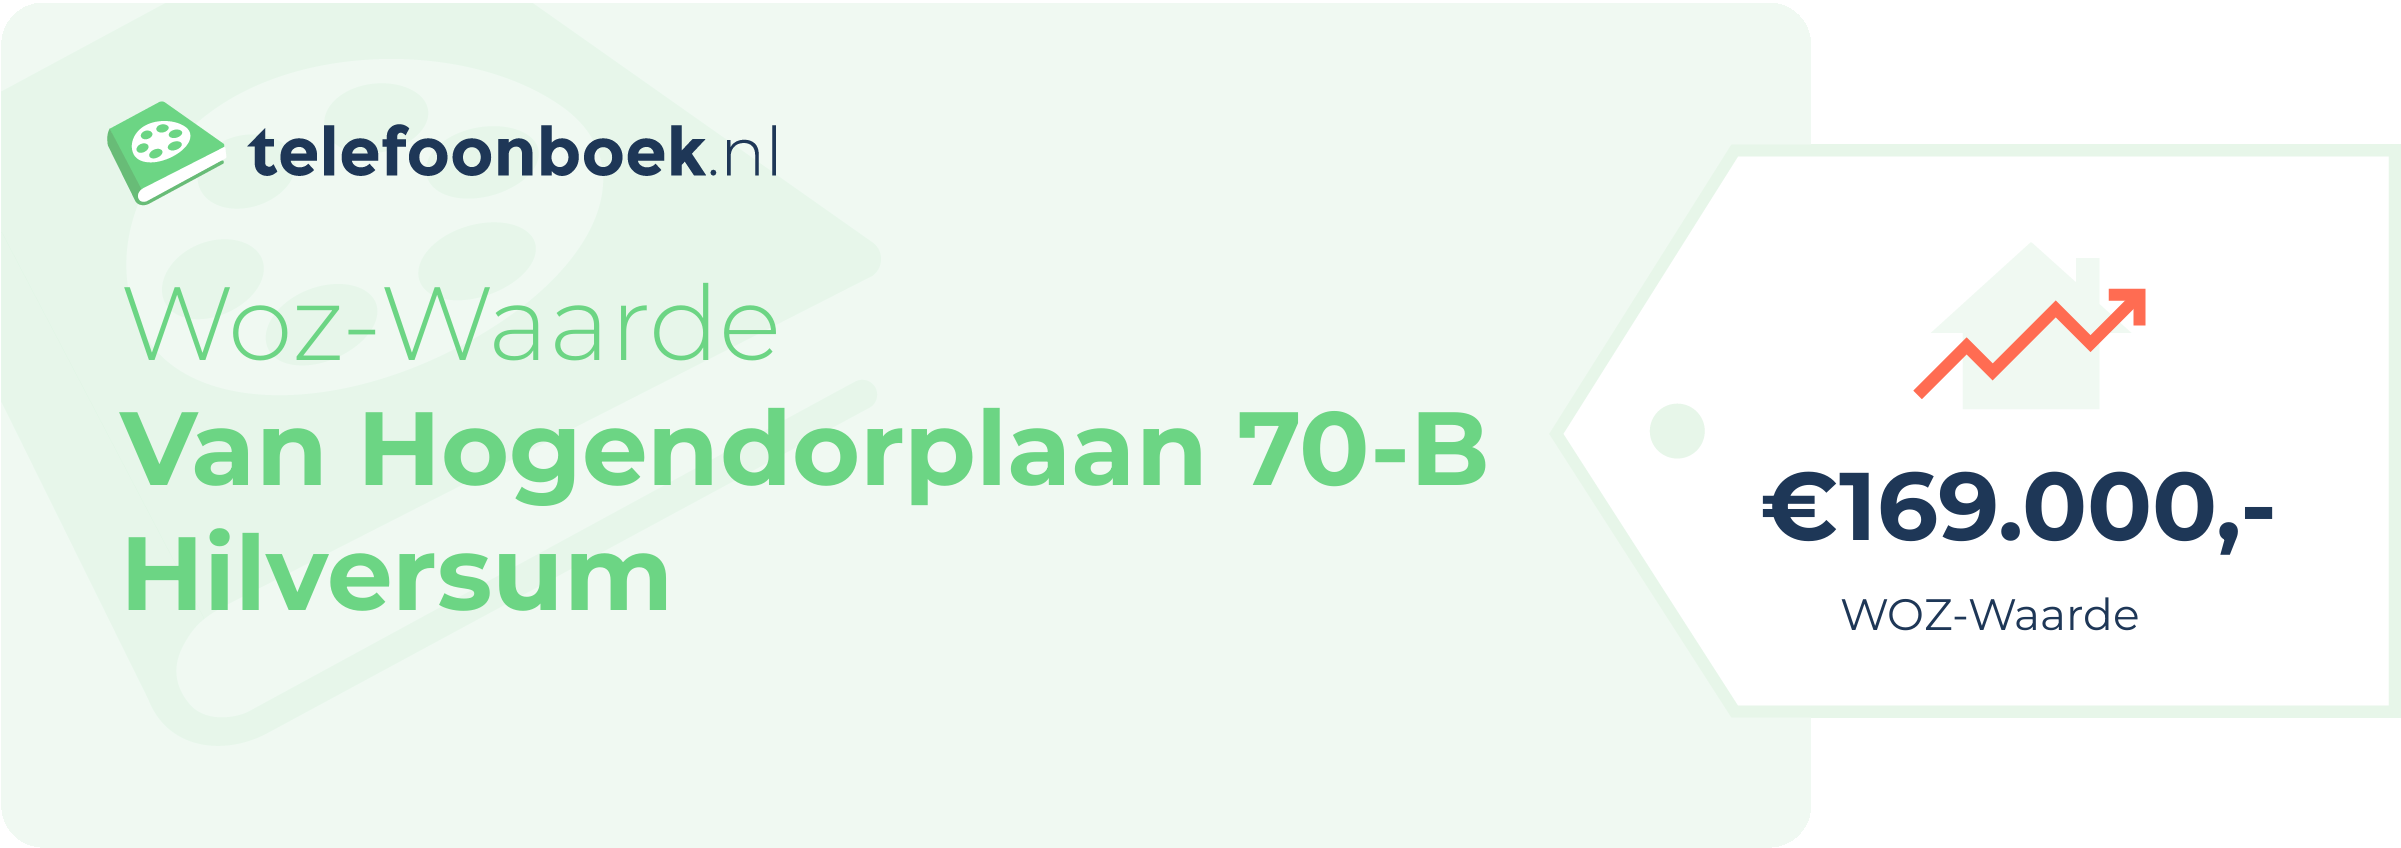 WOZ-waarde Van Hogendorplaan 70-B Hilversum